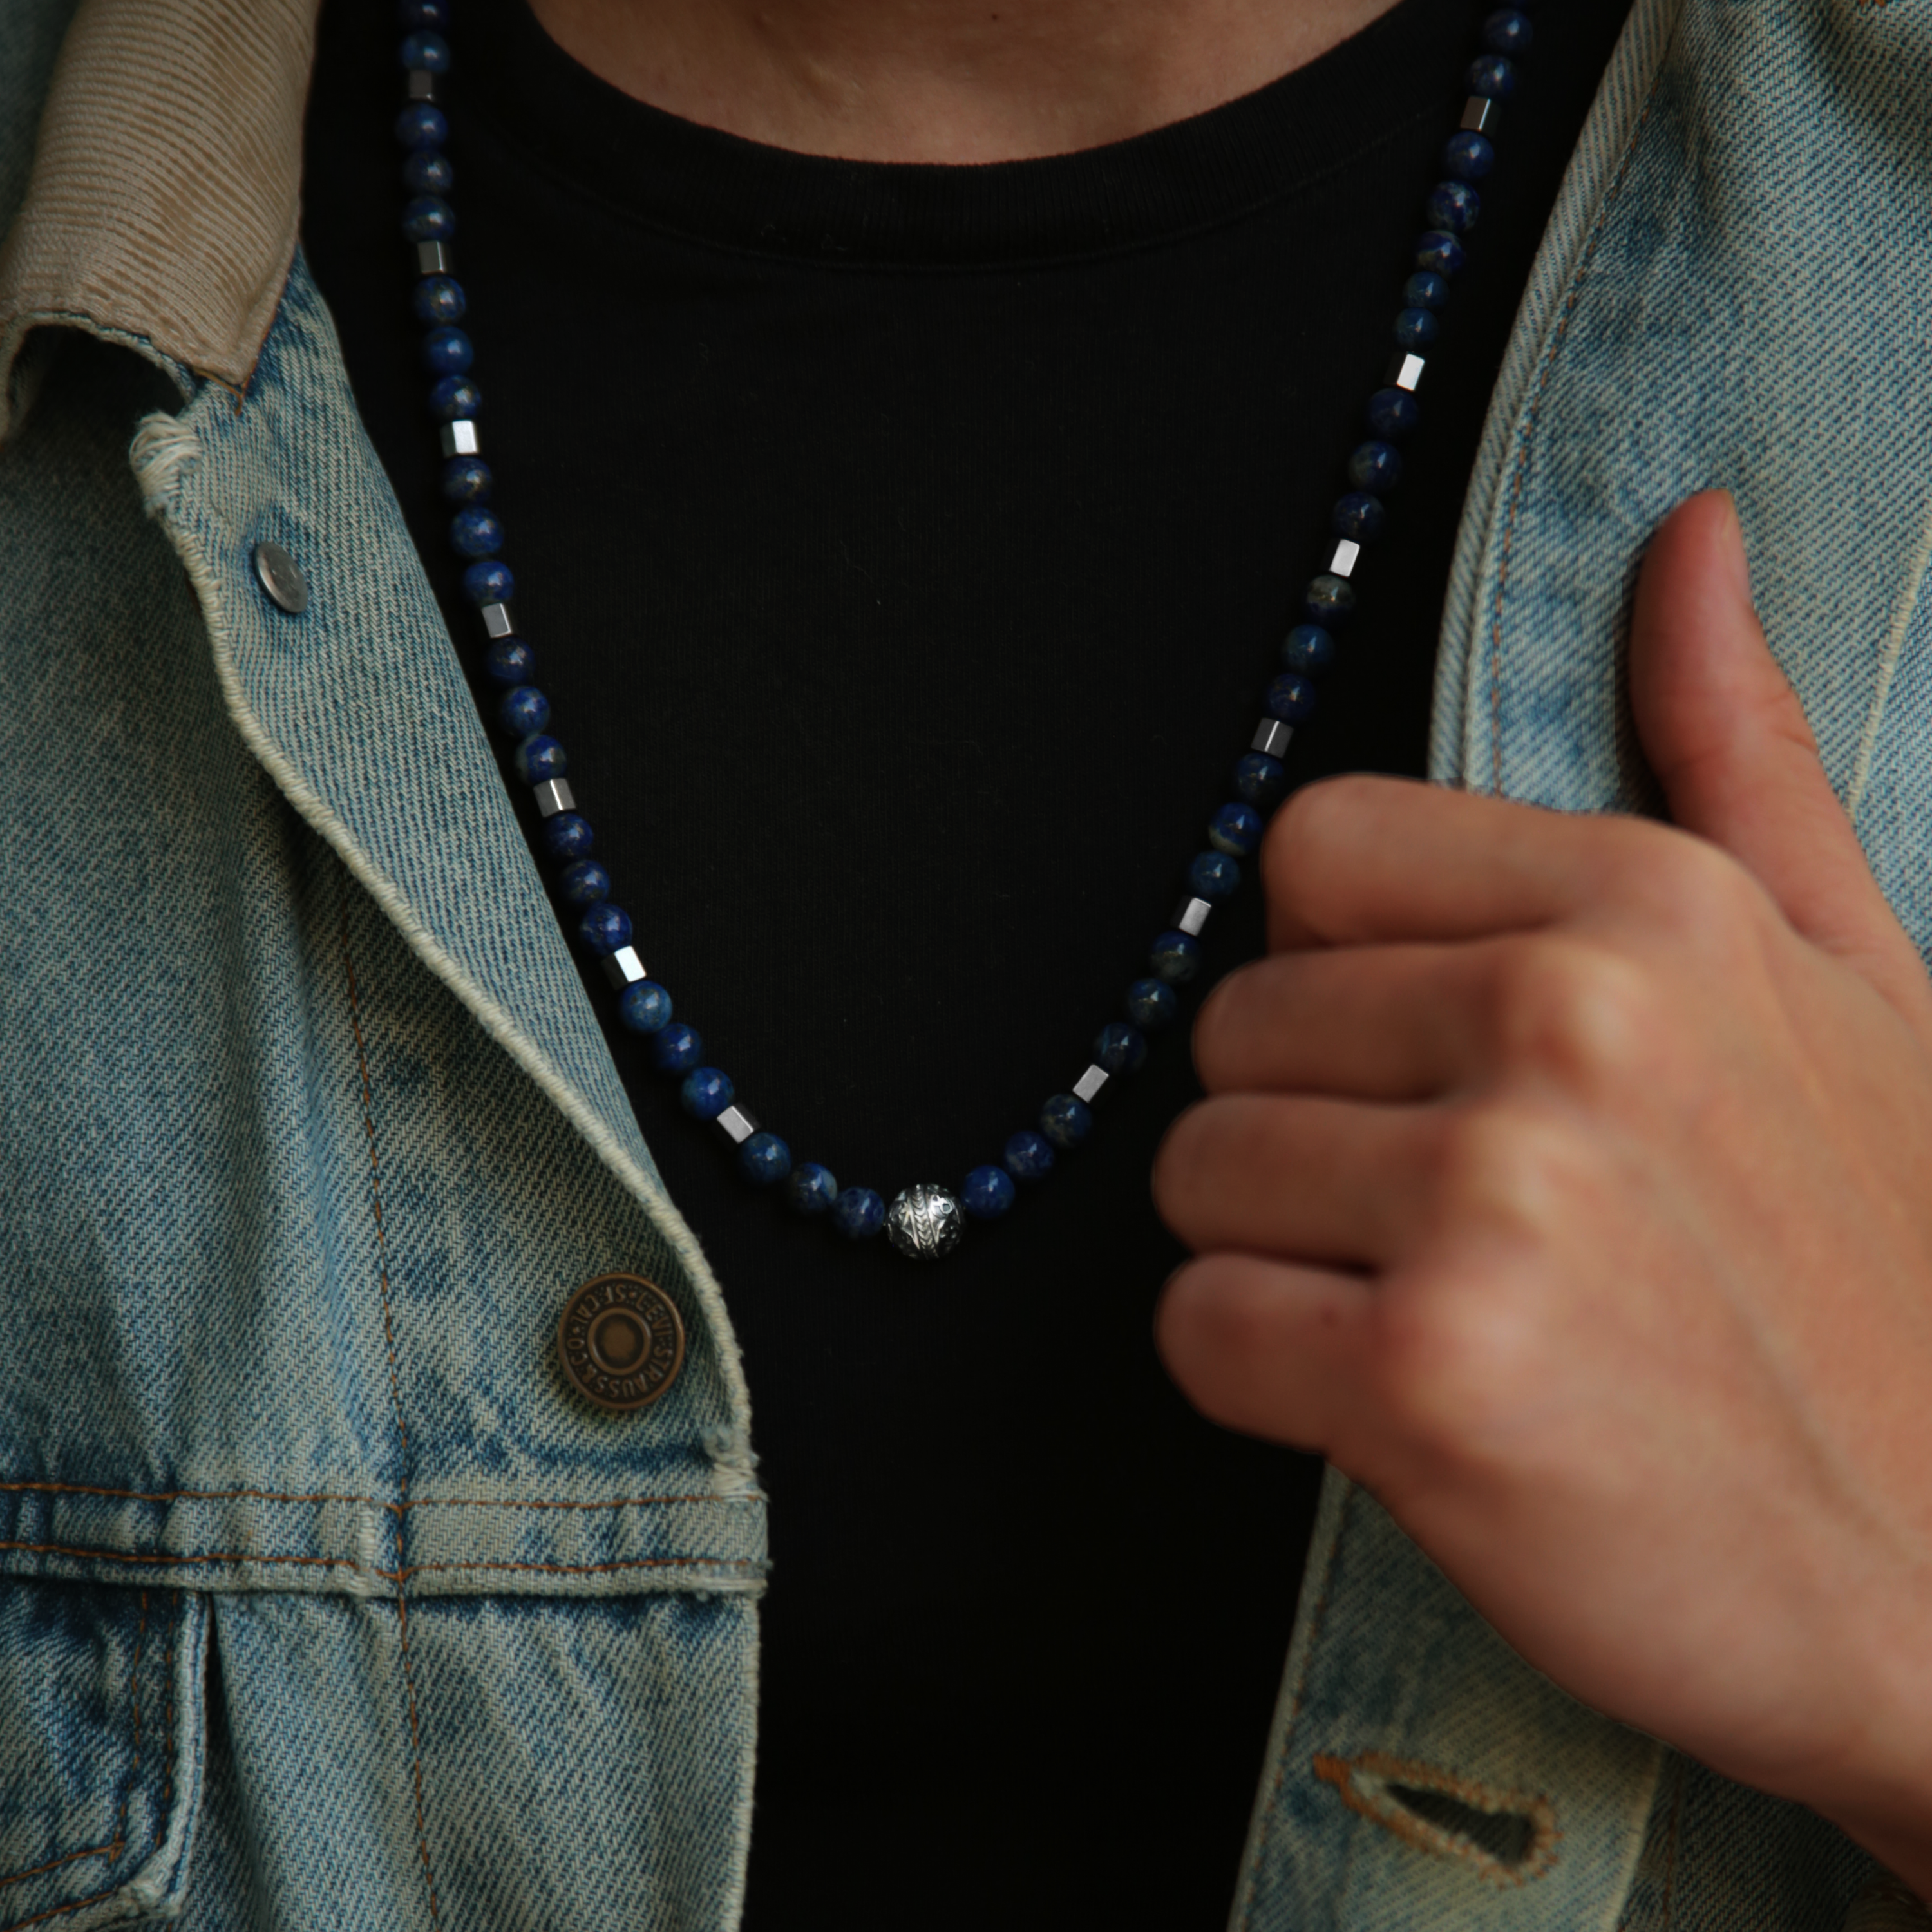 Lapis Lazuli & Gold Necklace